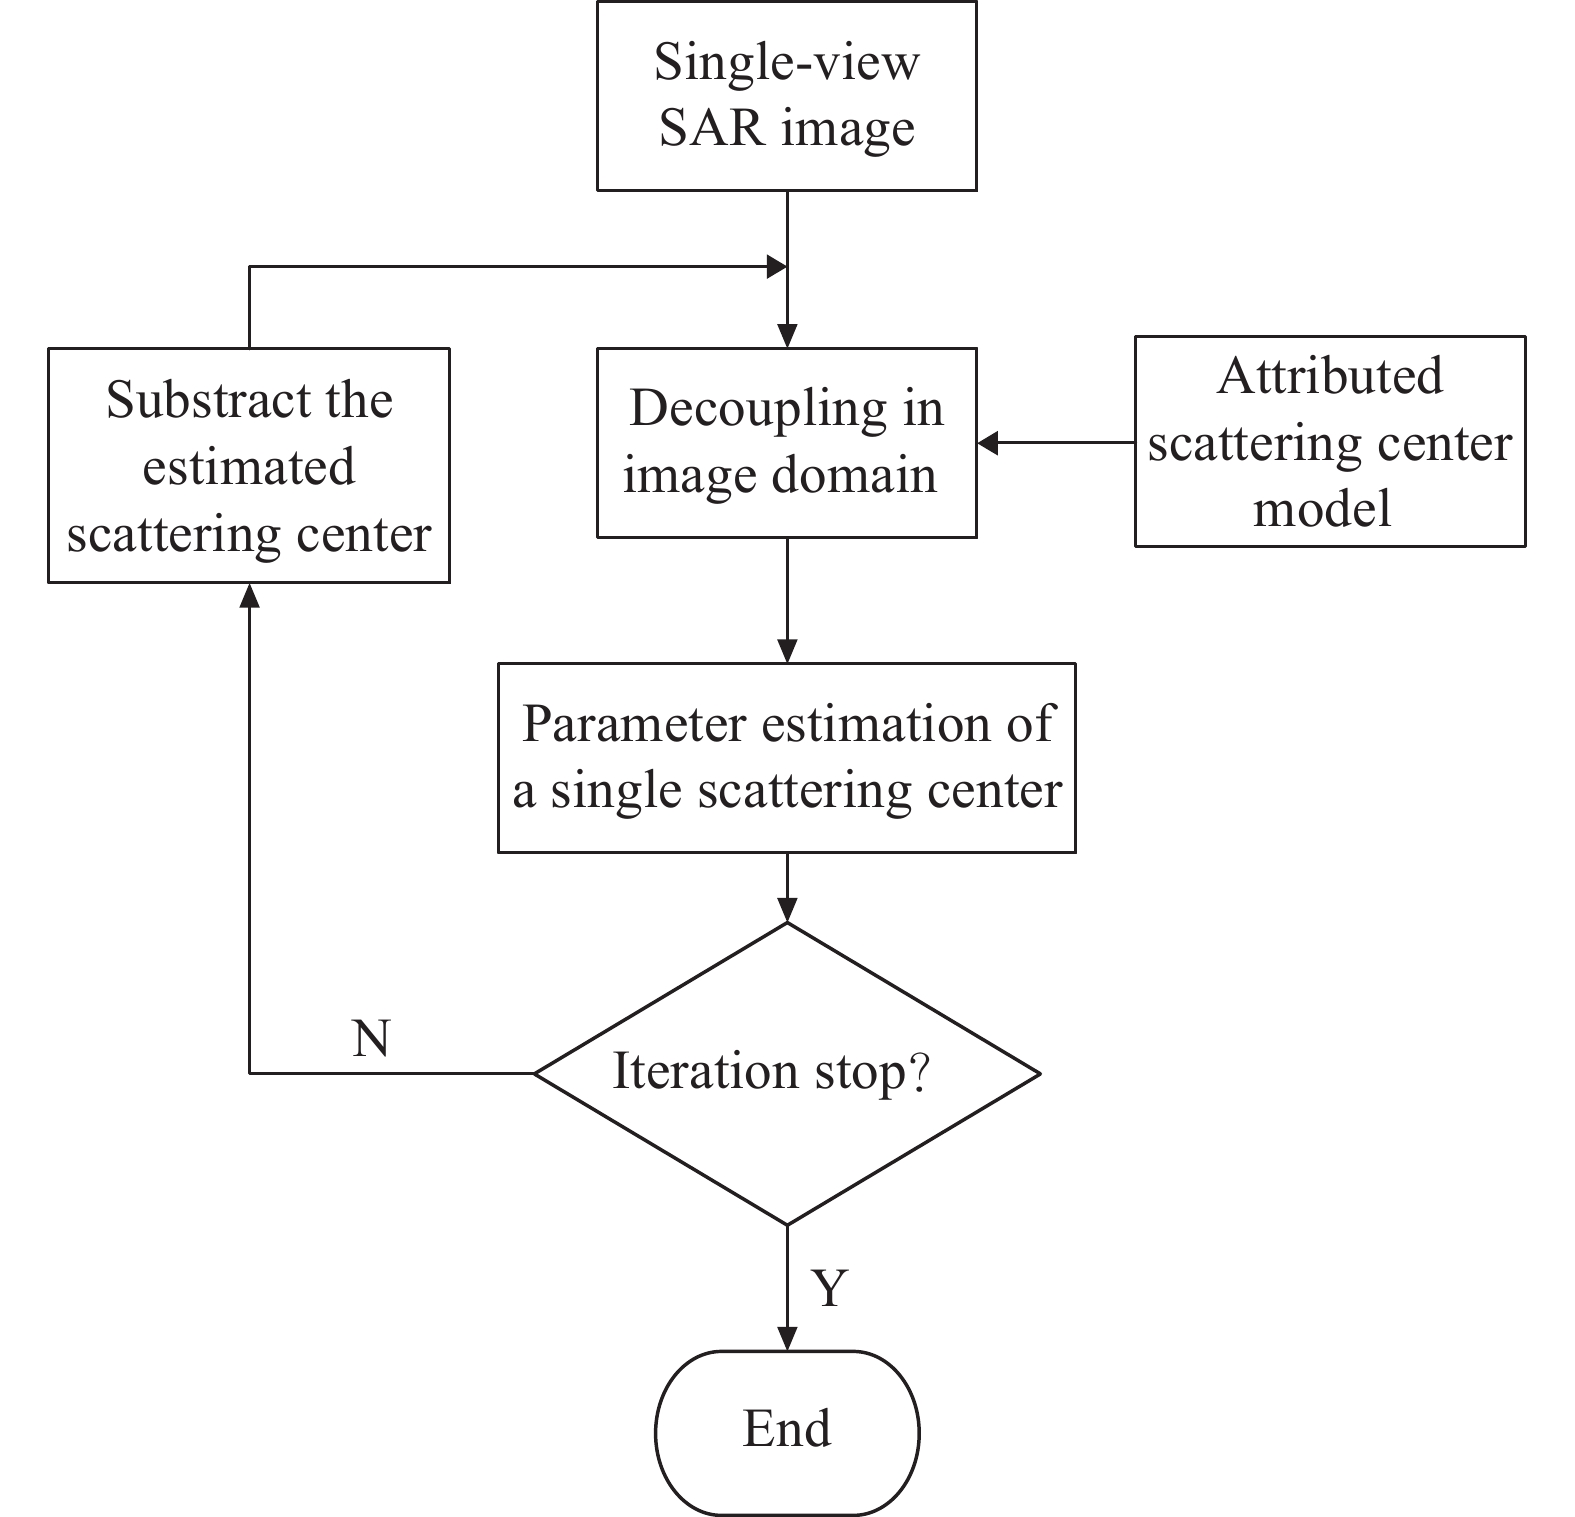 Basic procedure of attributed scattering center estimation via image decoupling